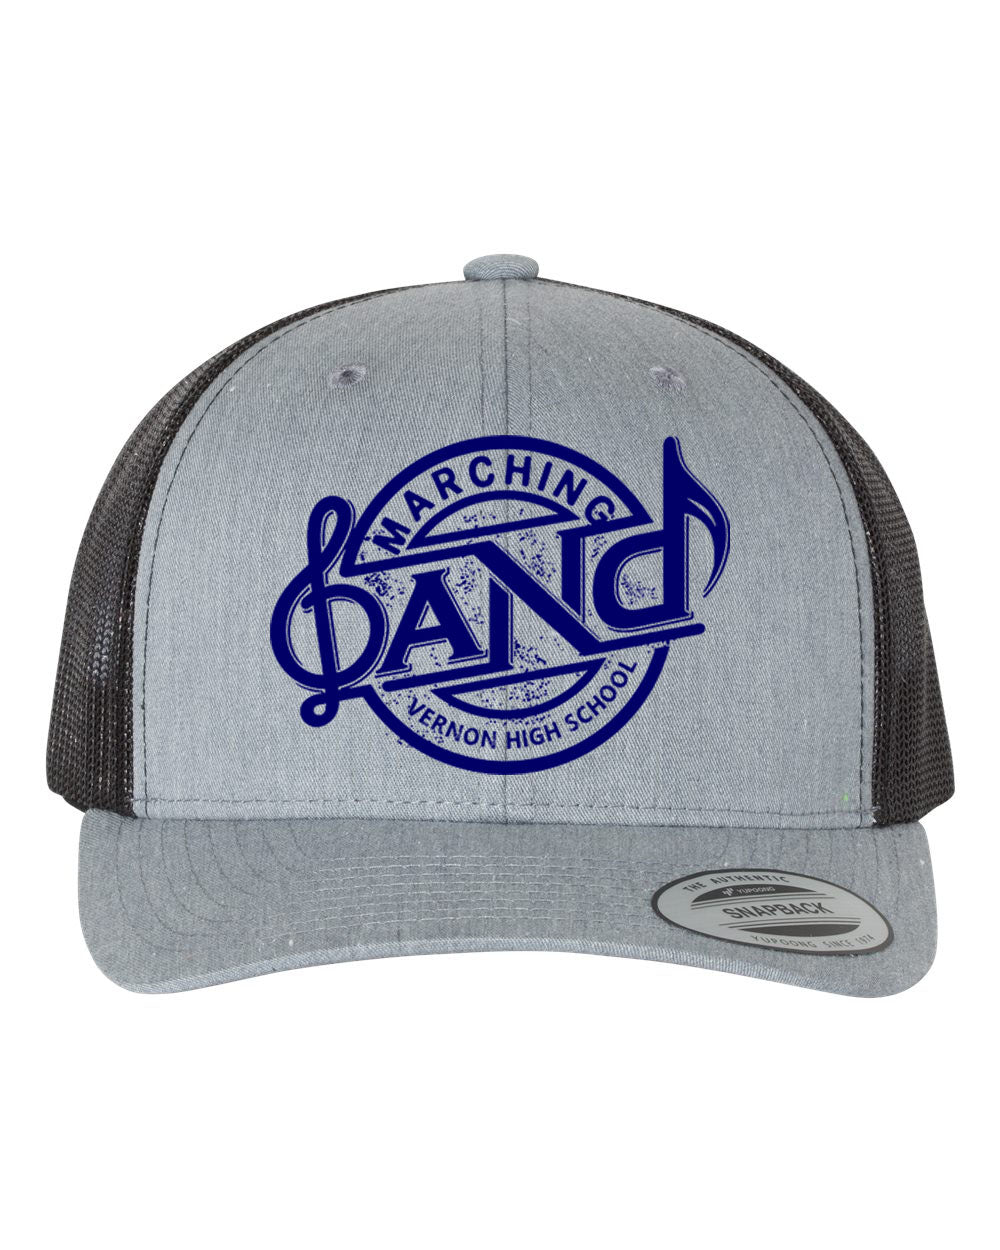 Vernon Marching Band Design 1 Trucker Hat